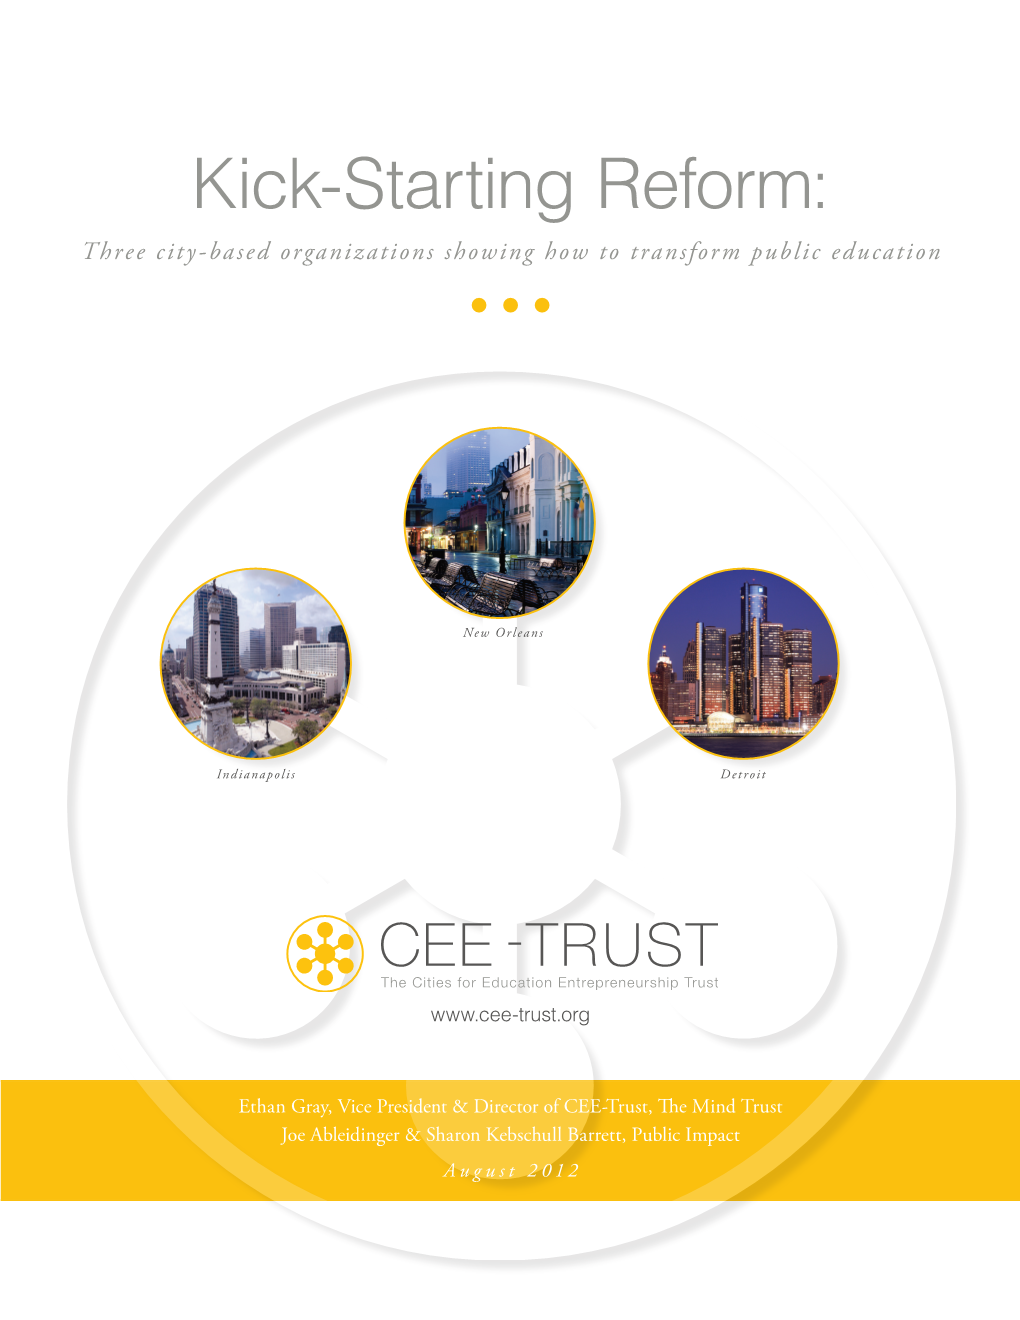 Kick-Starting Reform: Three City-Based Organizations Showing How to Transform Public Education